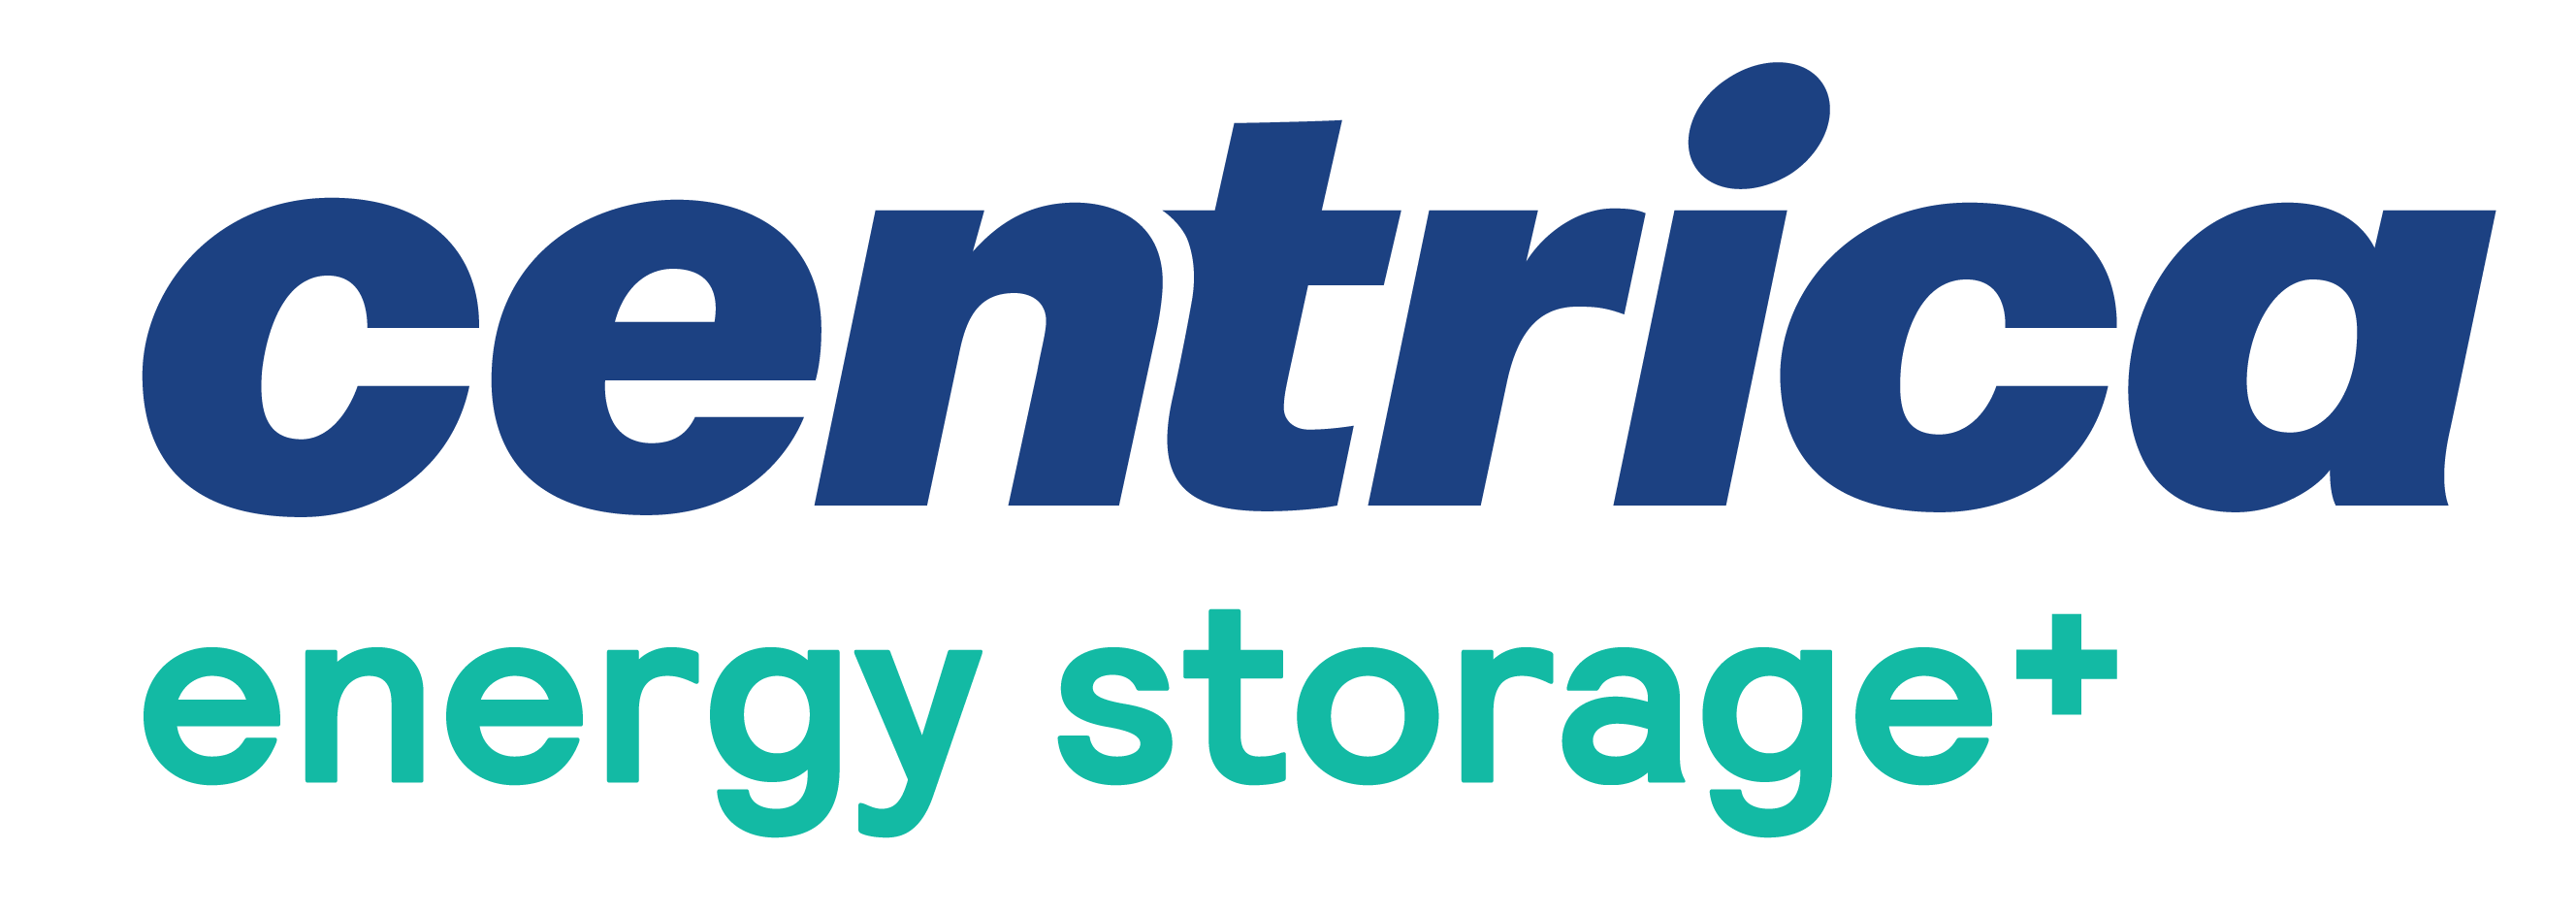 centrica Energy storage+ logo